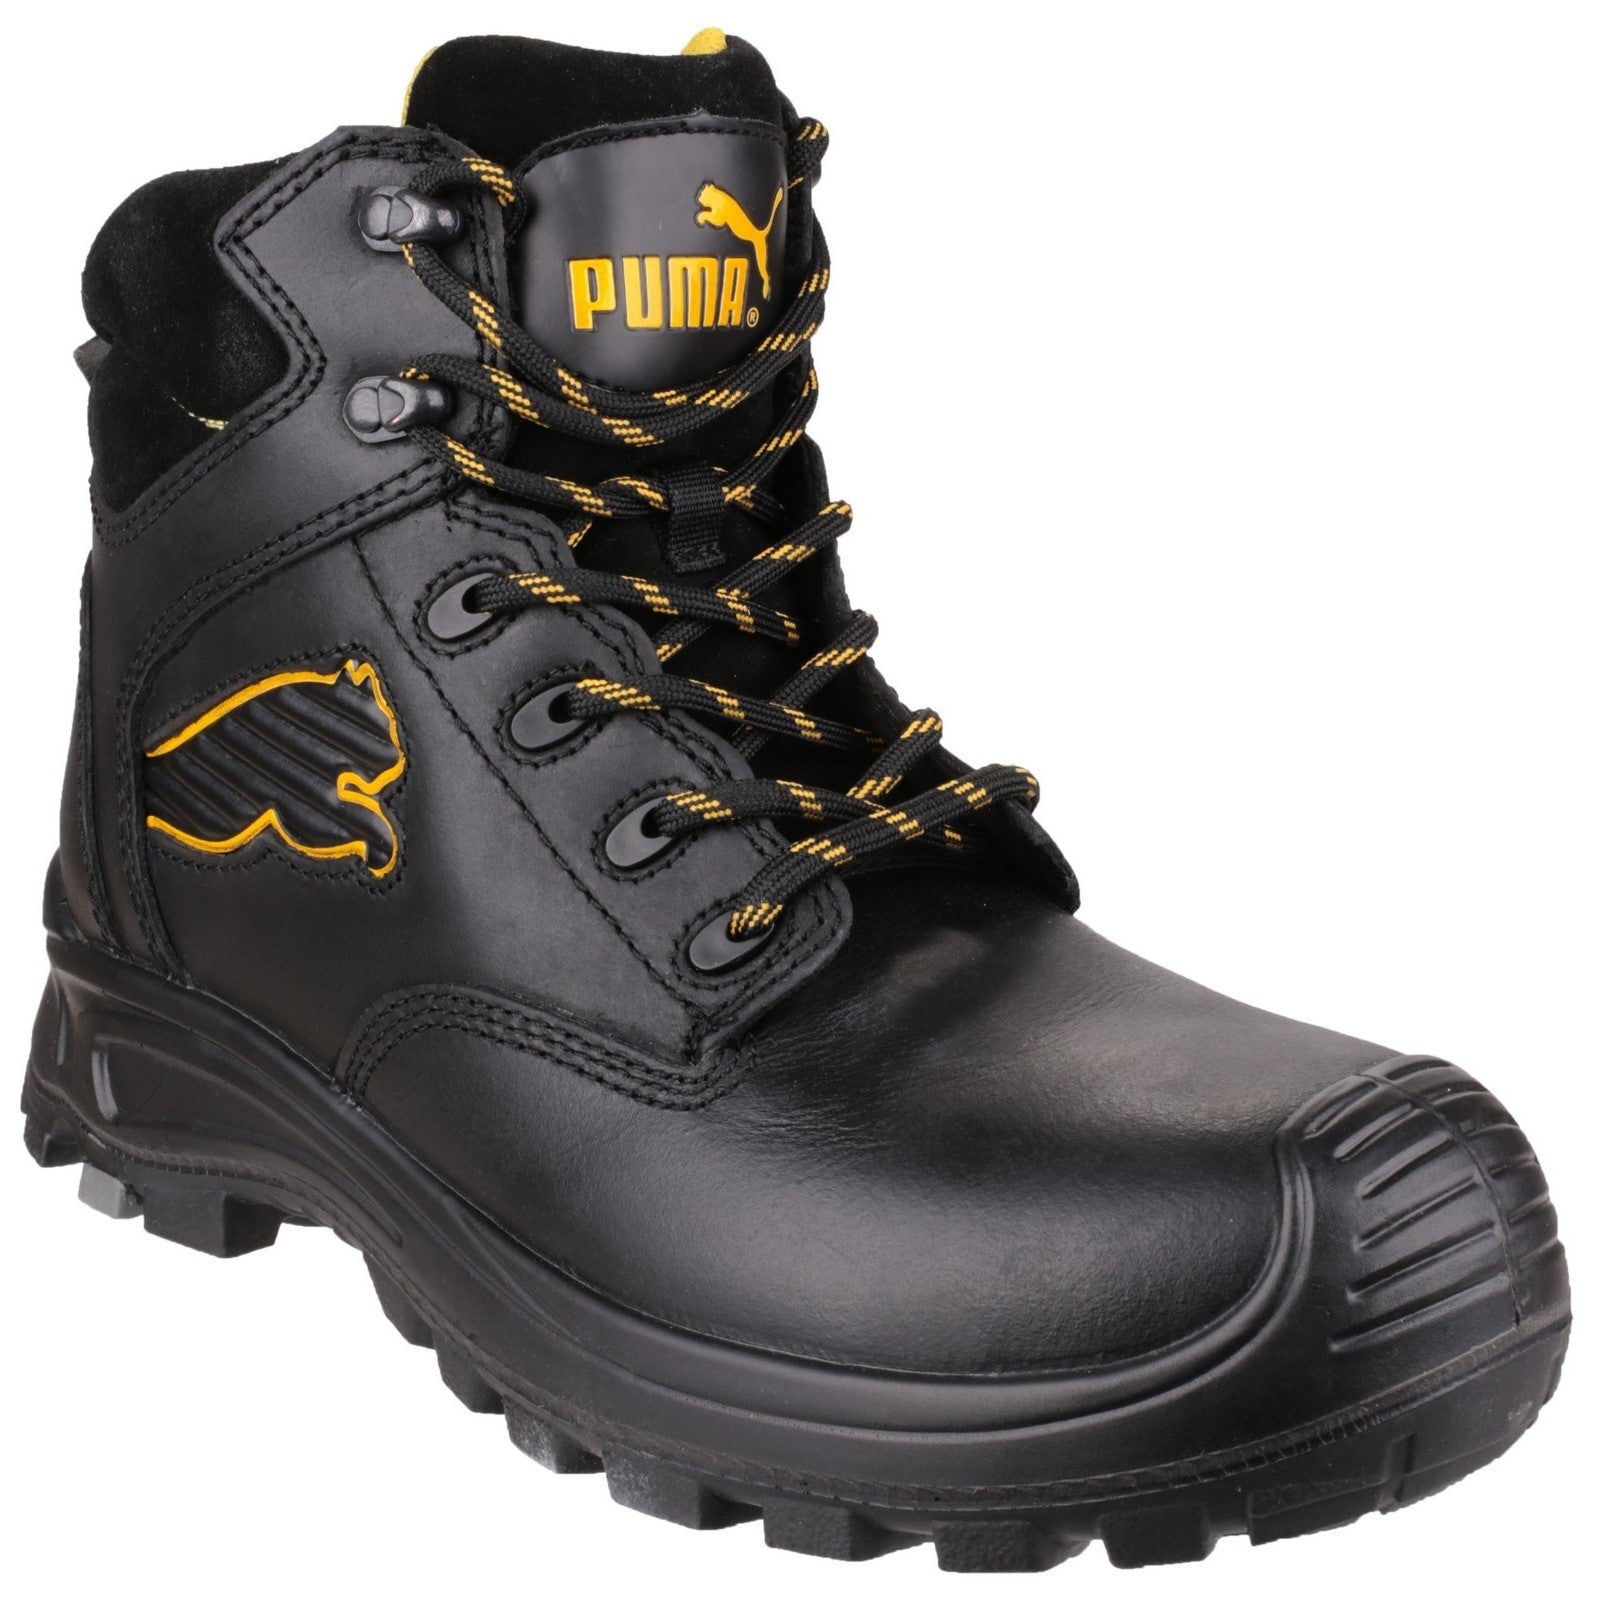 Puma Borneo Mid S3 Safety Boot